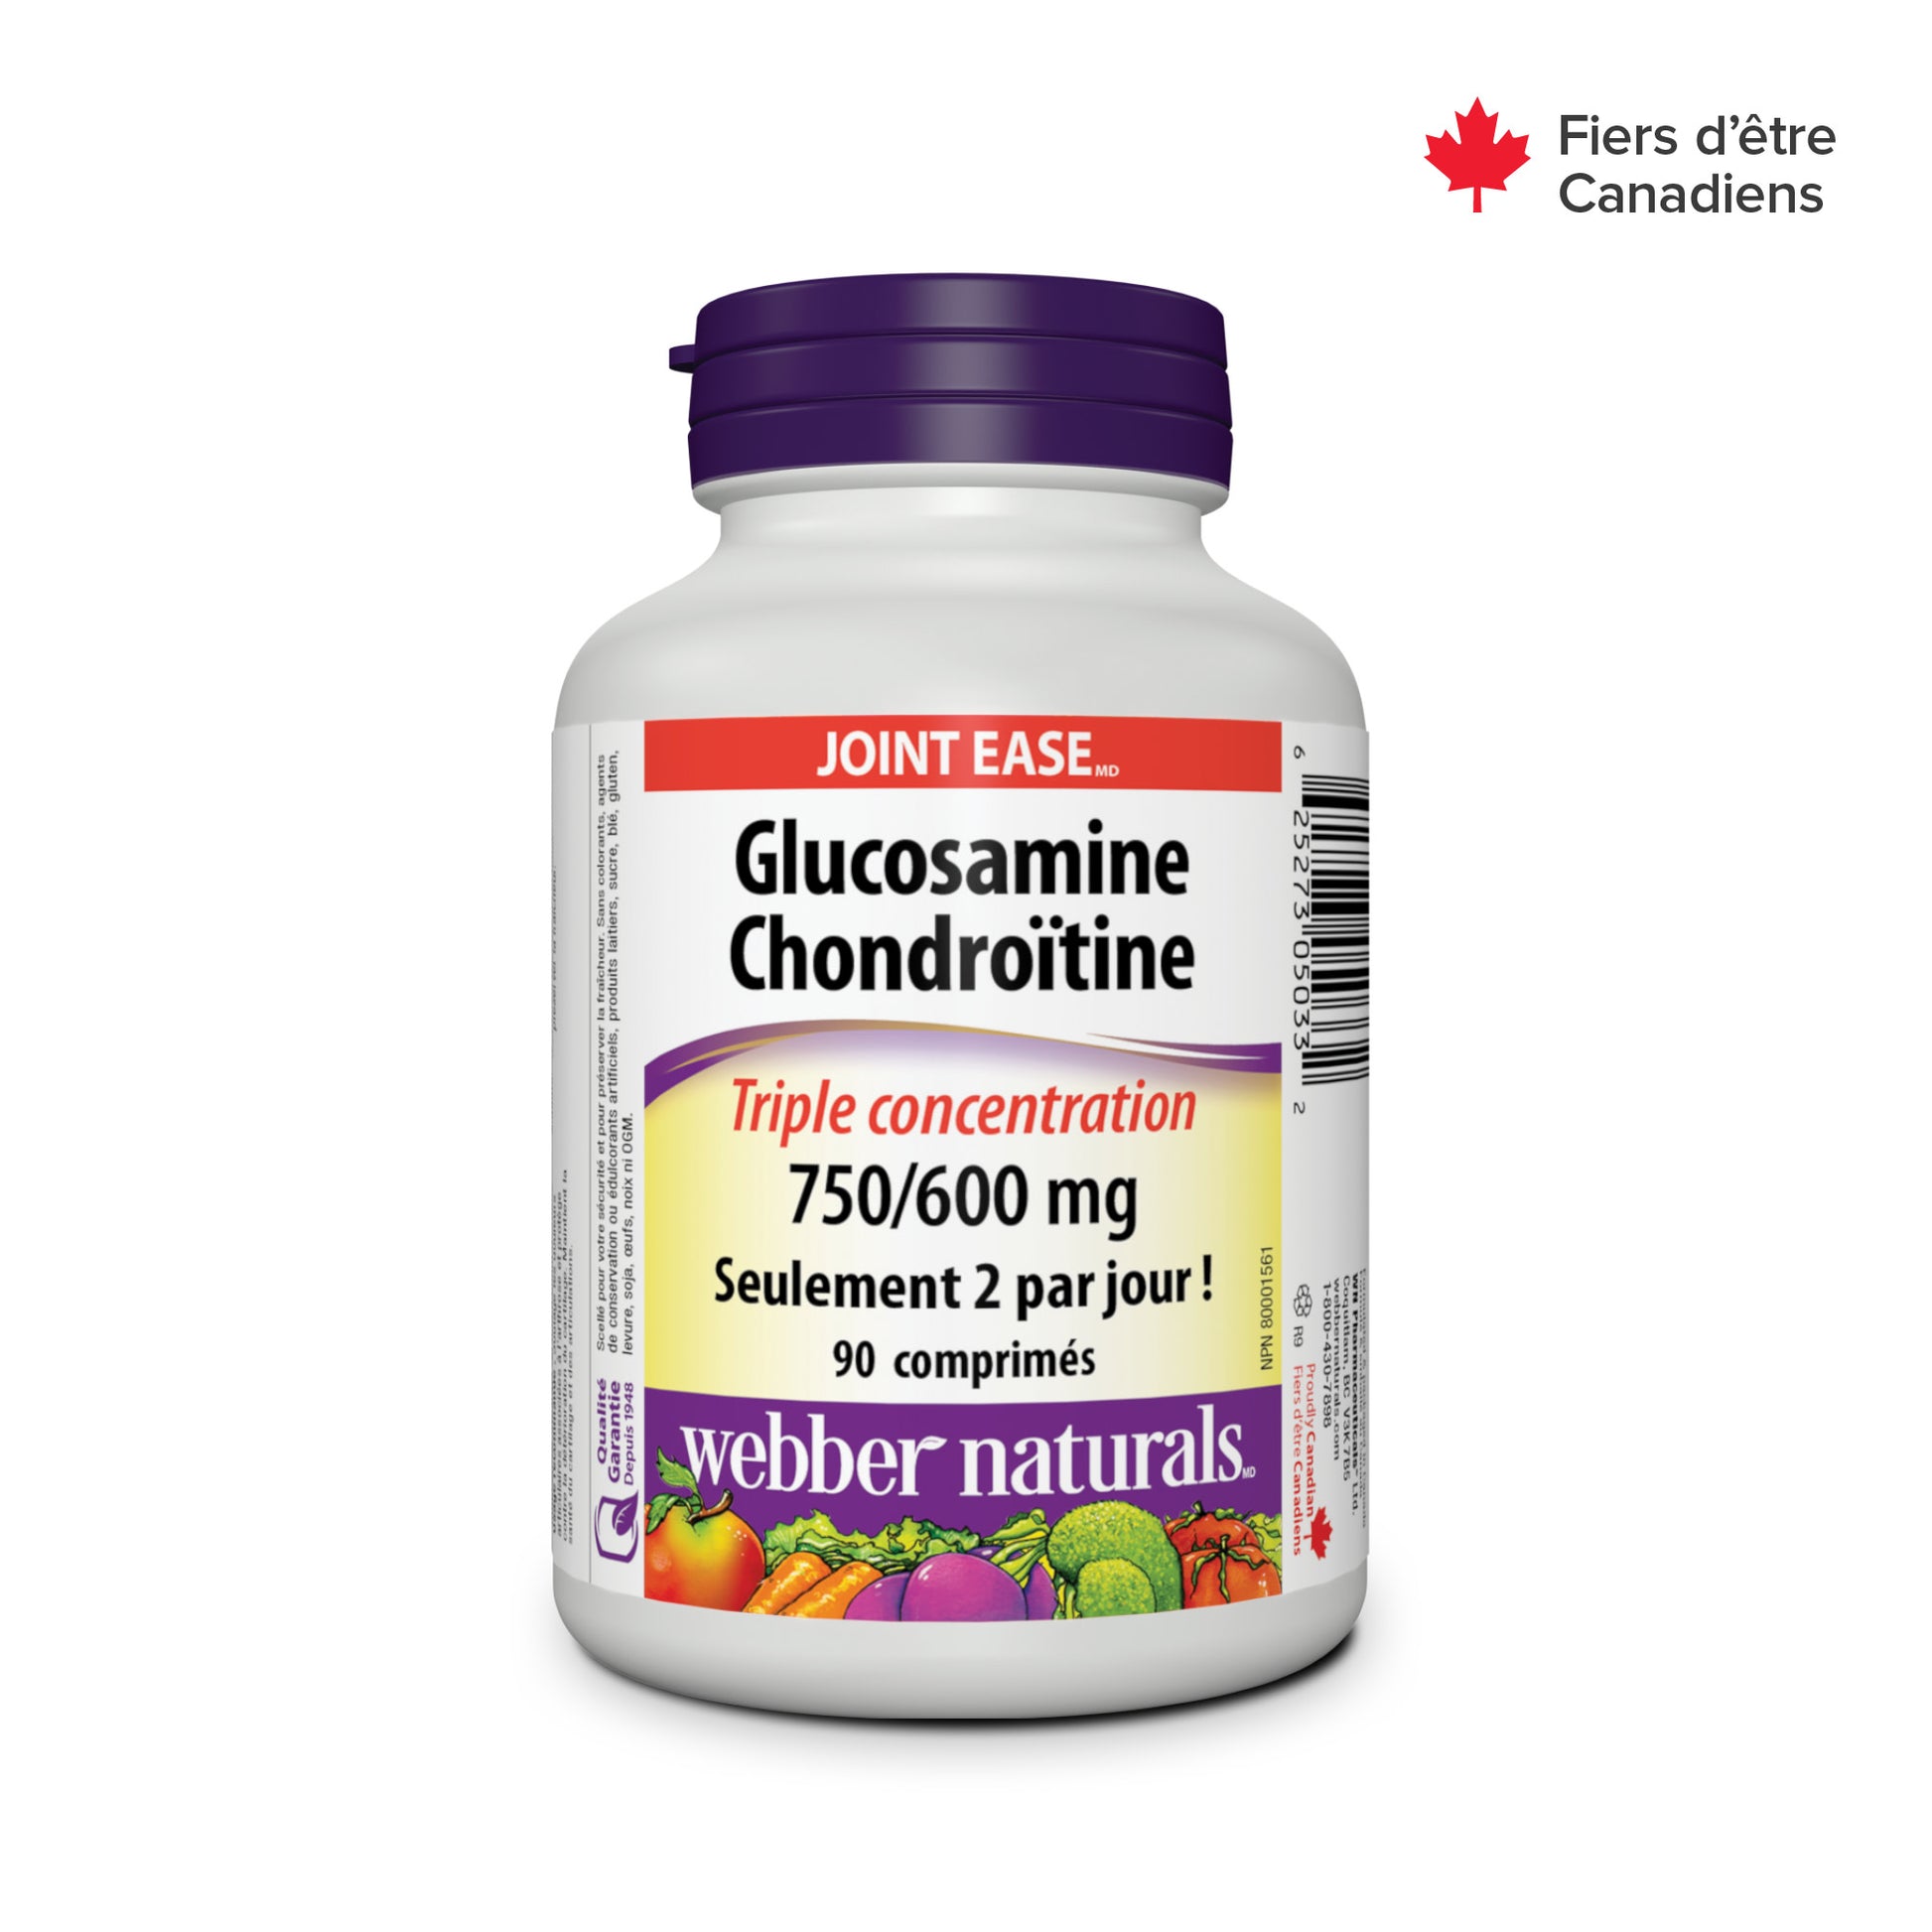 Glucosamine Chondroitin Triple Strength 750/600 mg for Webber Naturals|v|hi-res|WN5033